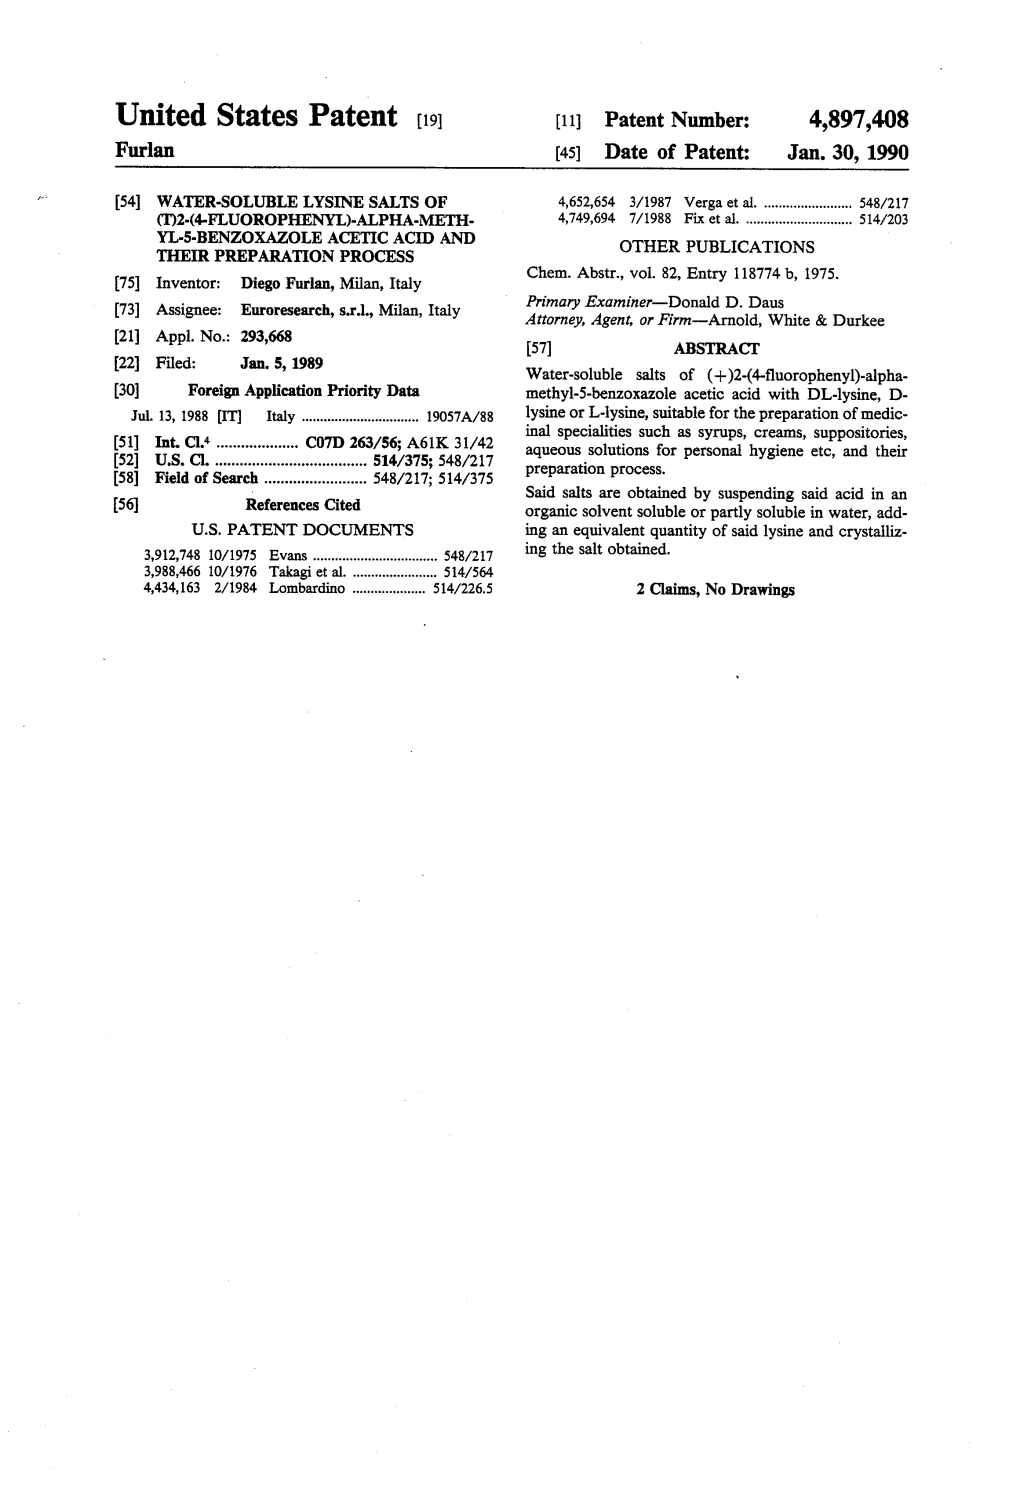 United States Patent (19) (11 Patent Number: 4,897,408 Furlan (45) Date of Patent: Jan